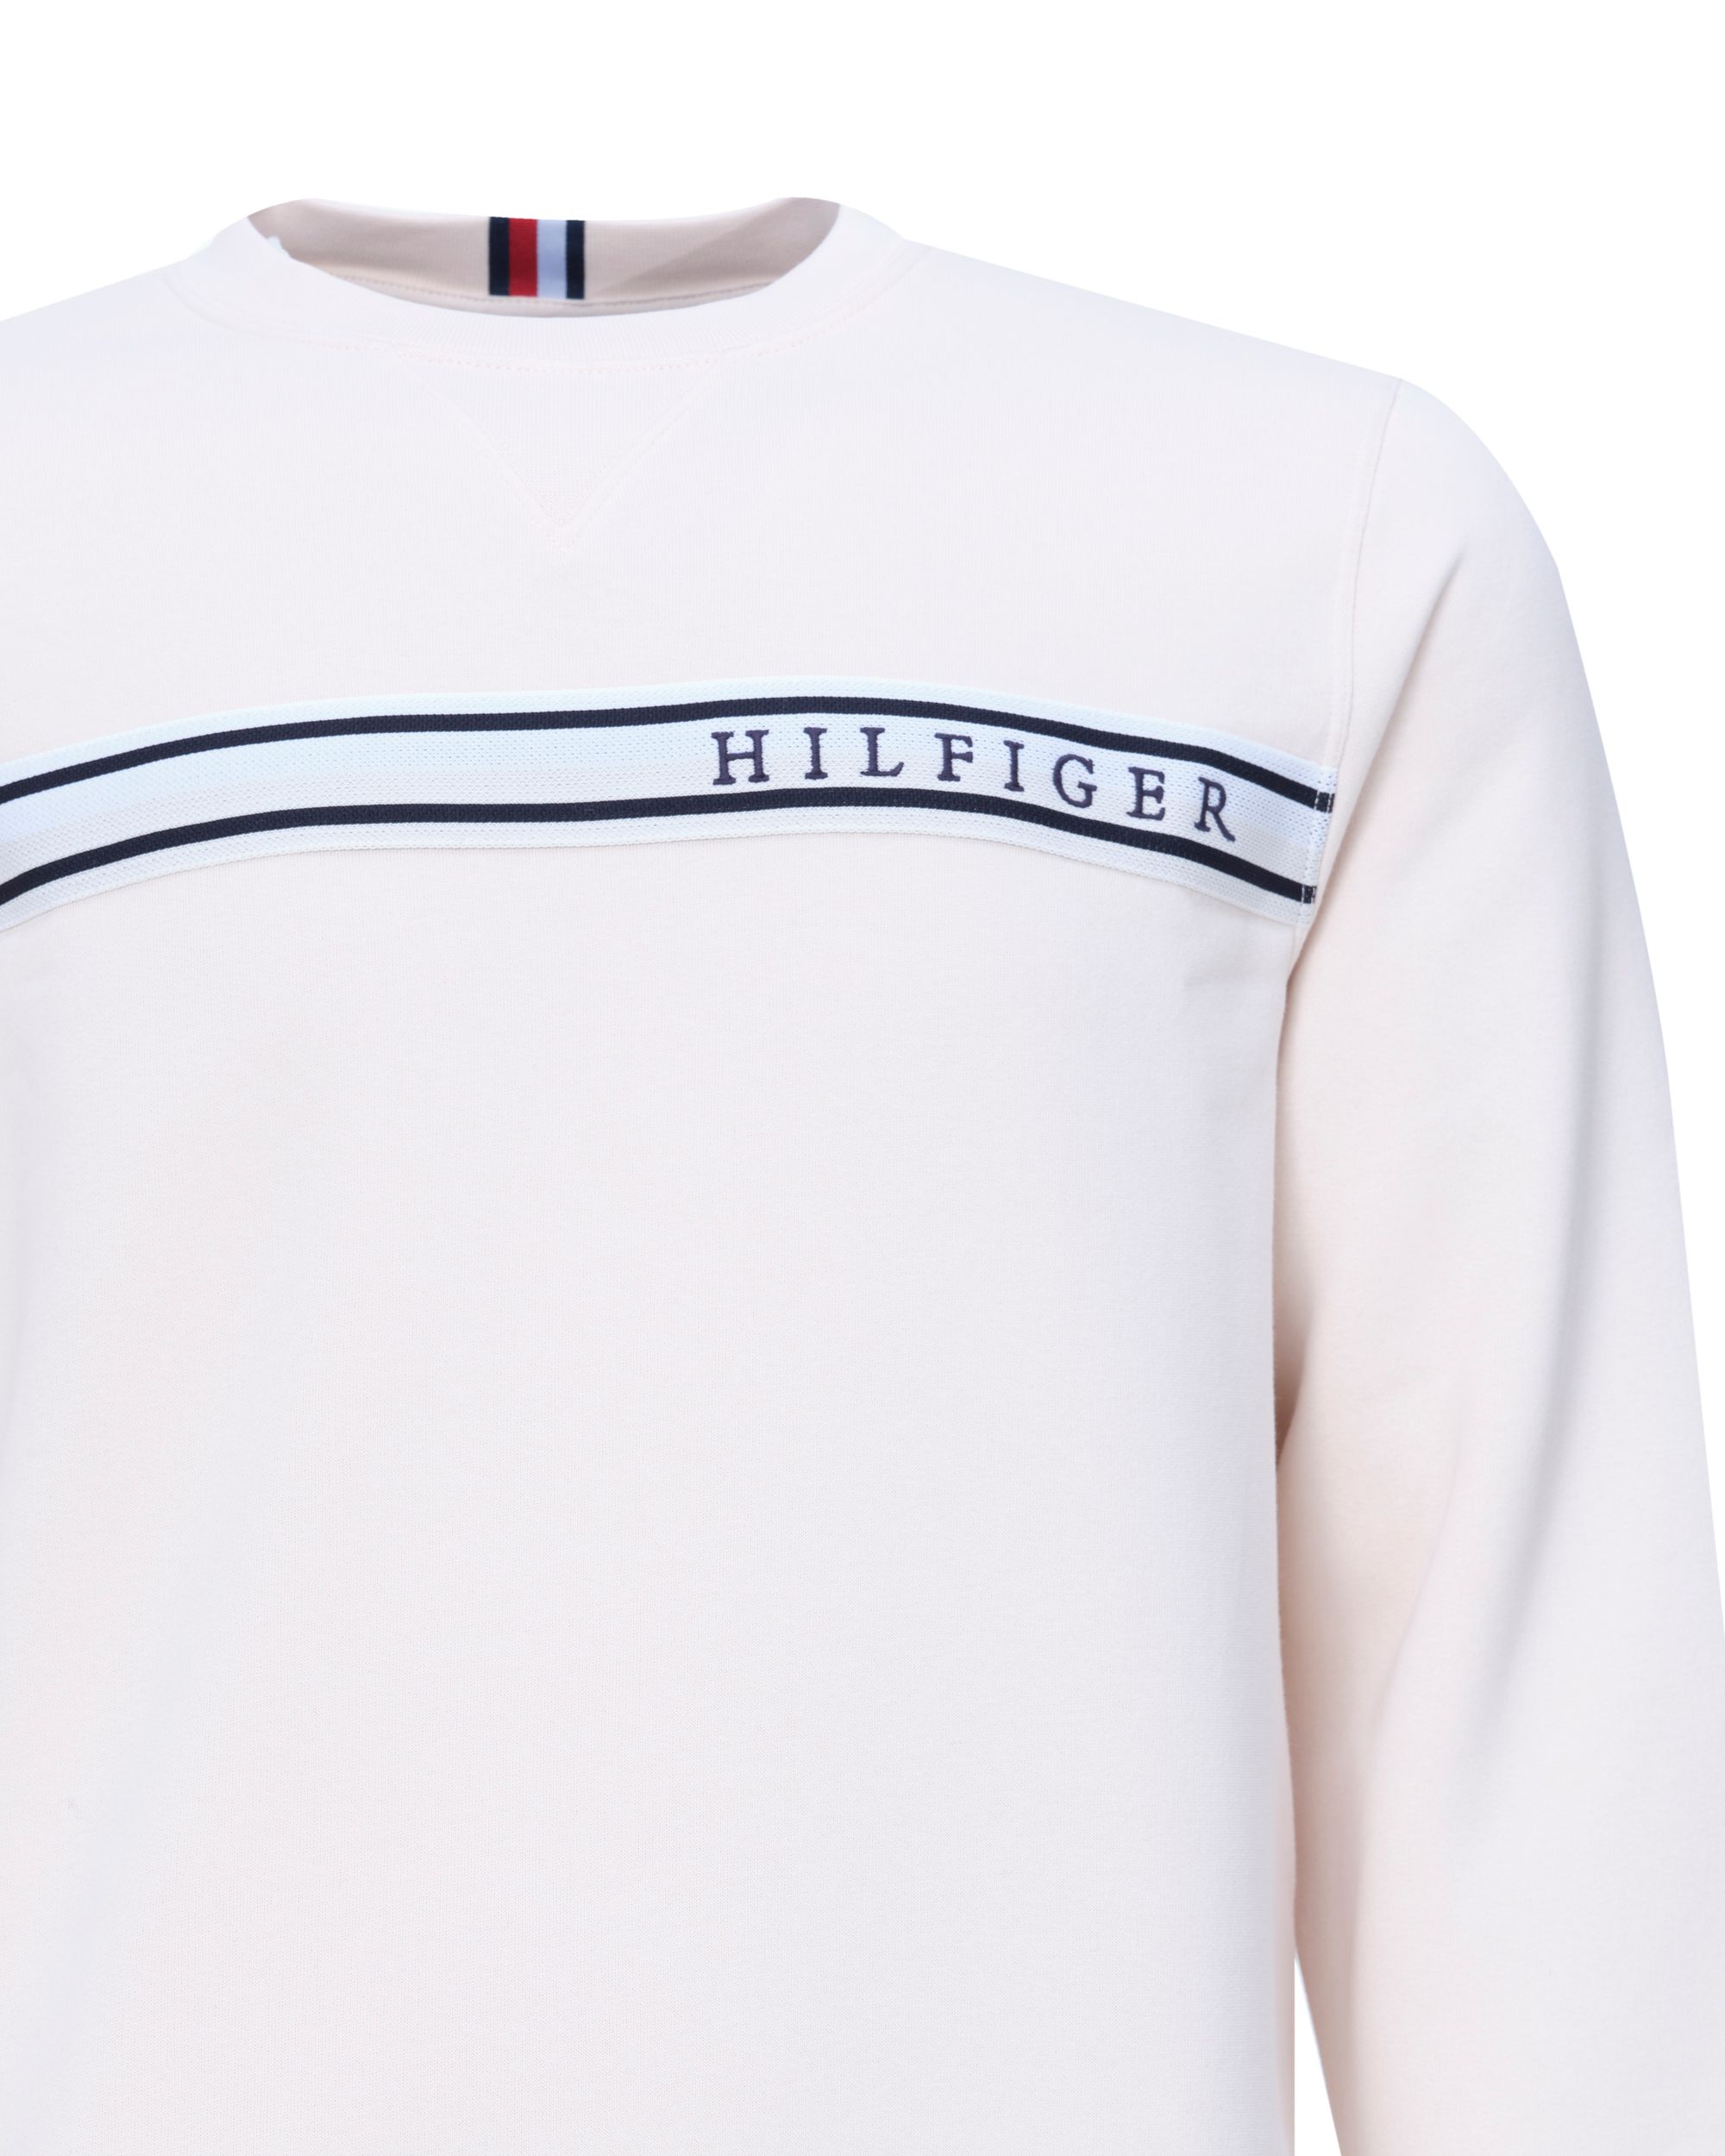 Tommy Hilfiger Menswear Sweater Off white 081218-001-L